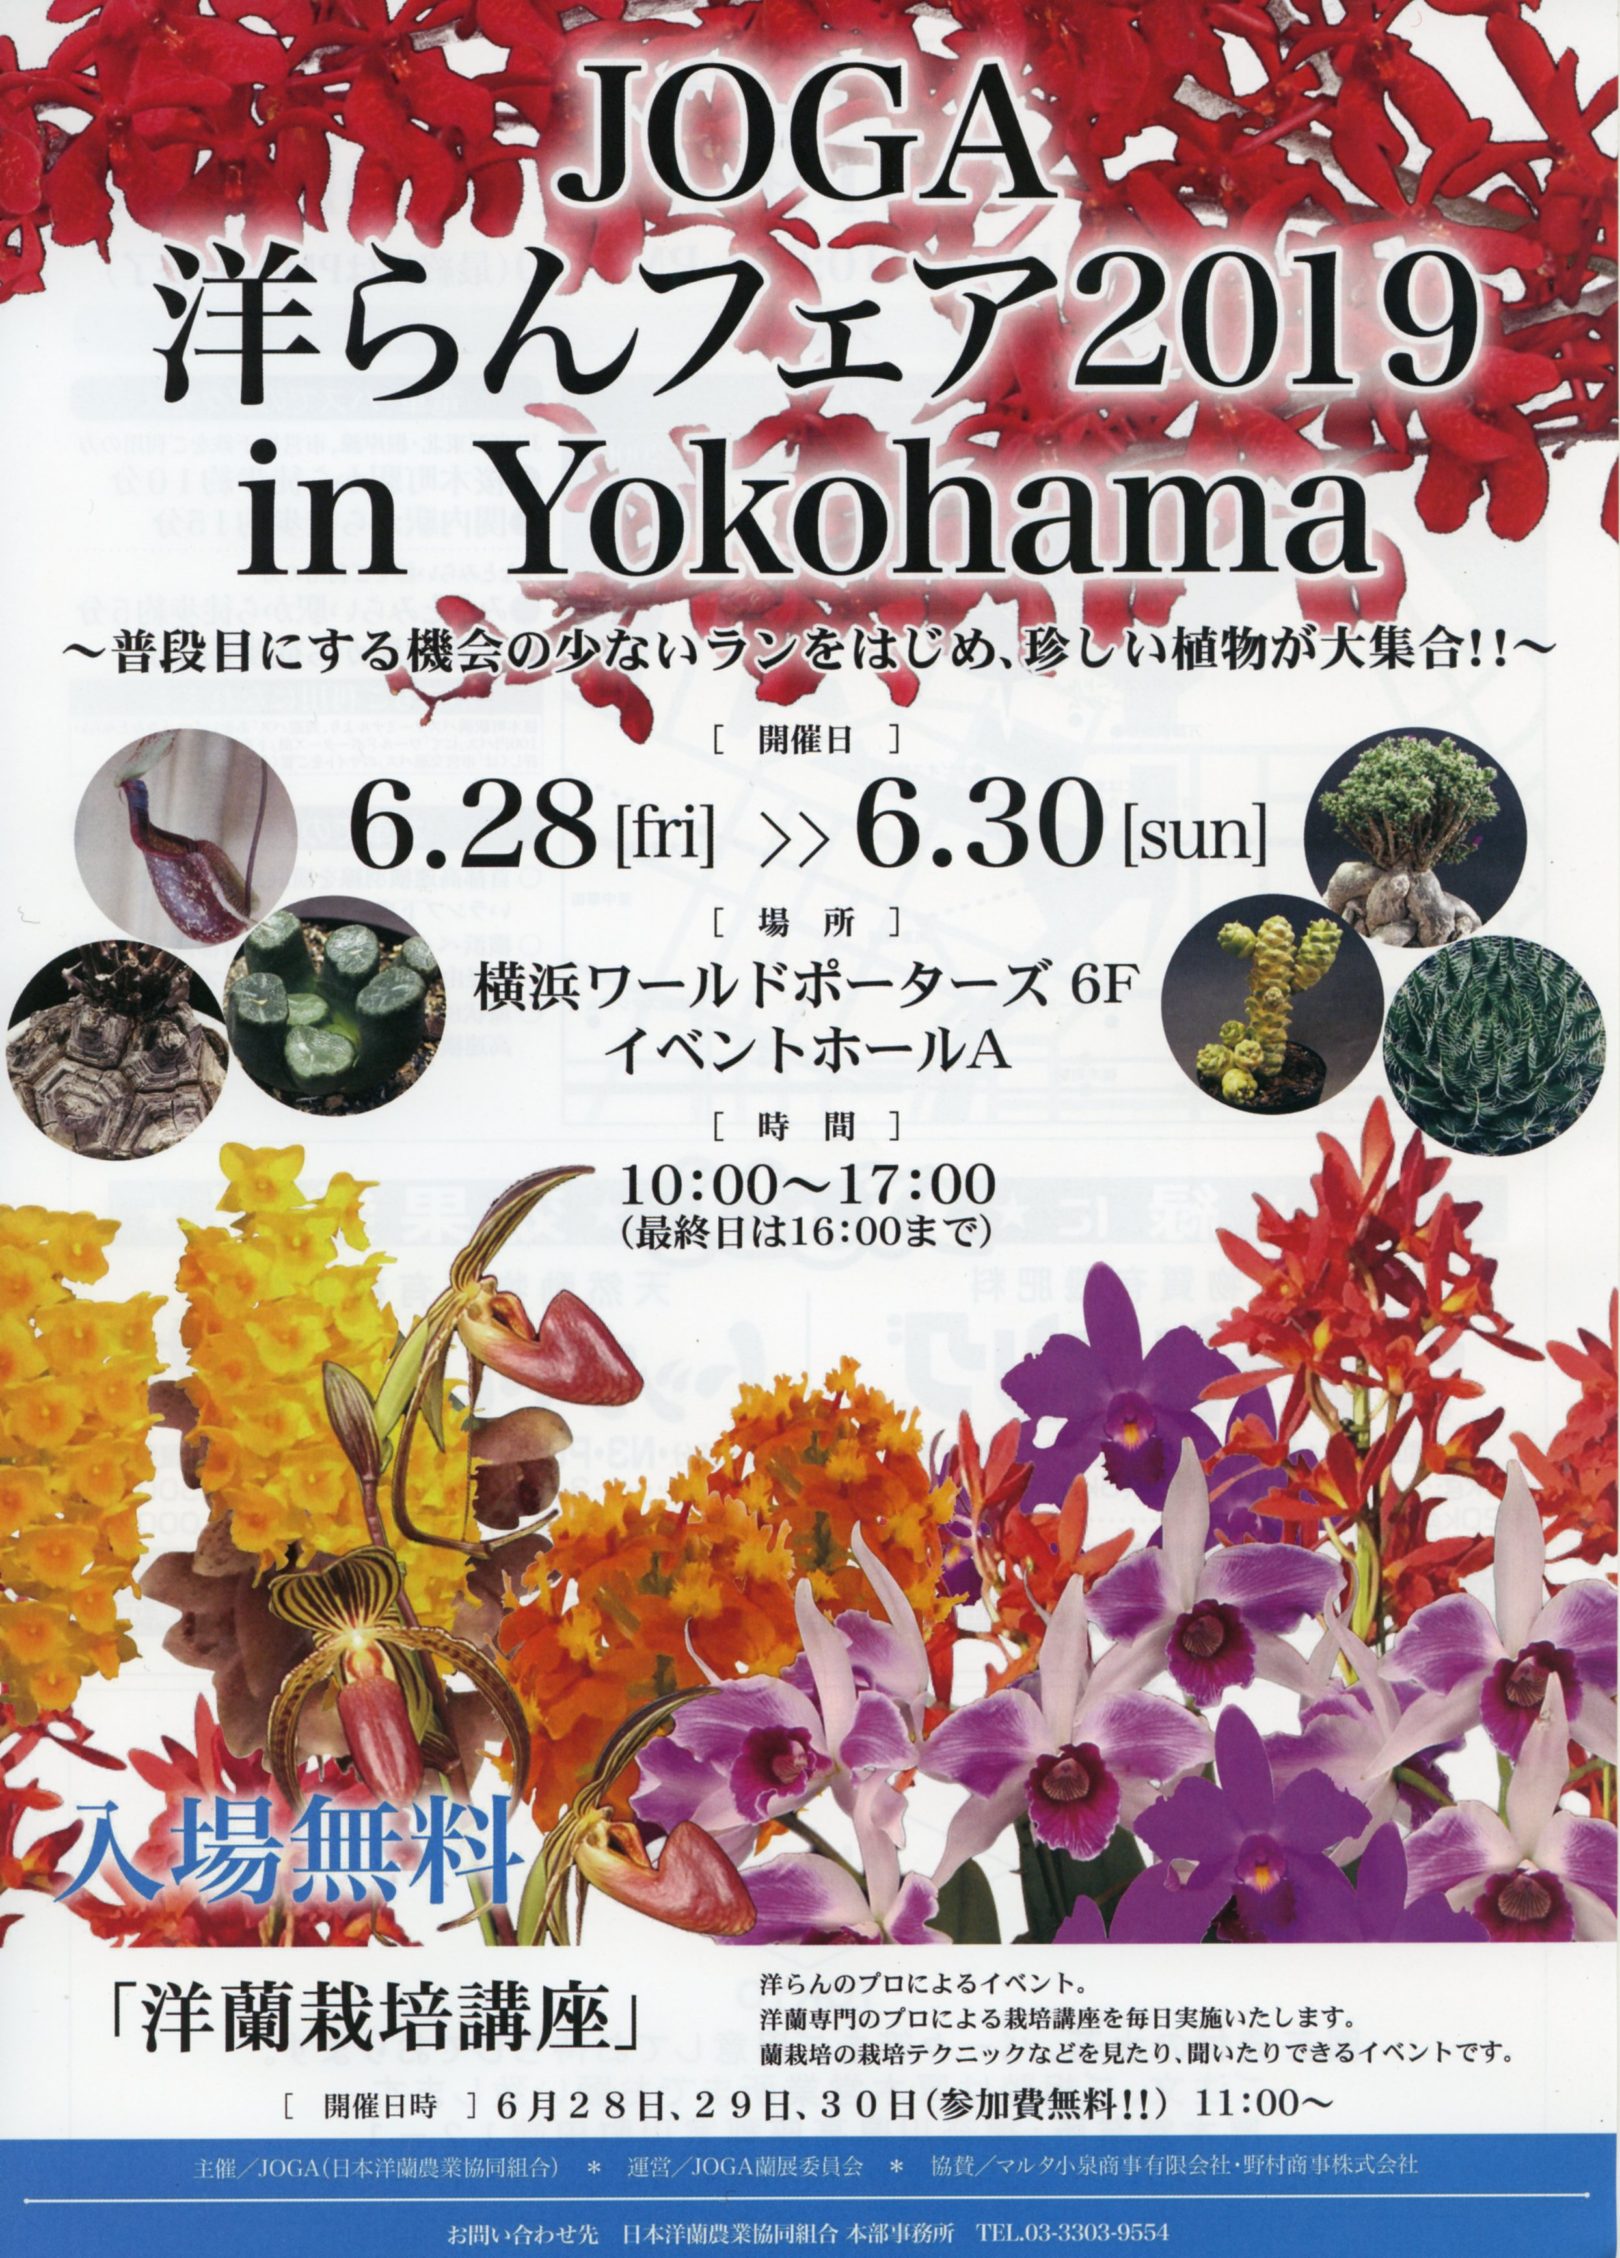 JOGA洋らんフェア2019 in YOKOHAMA